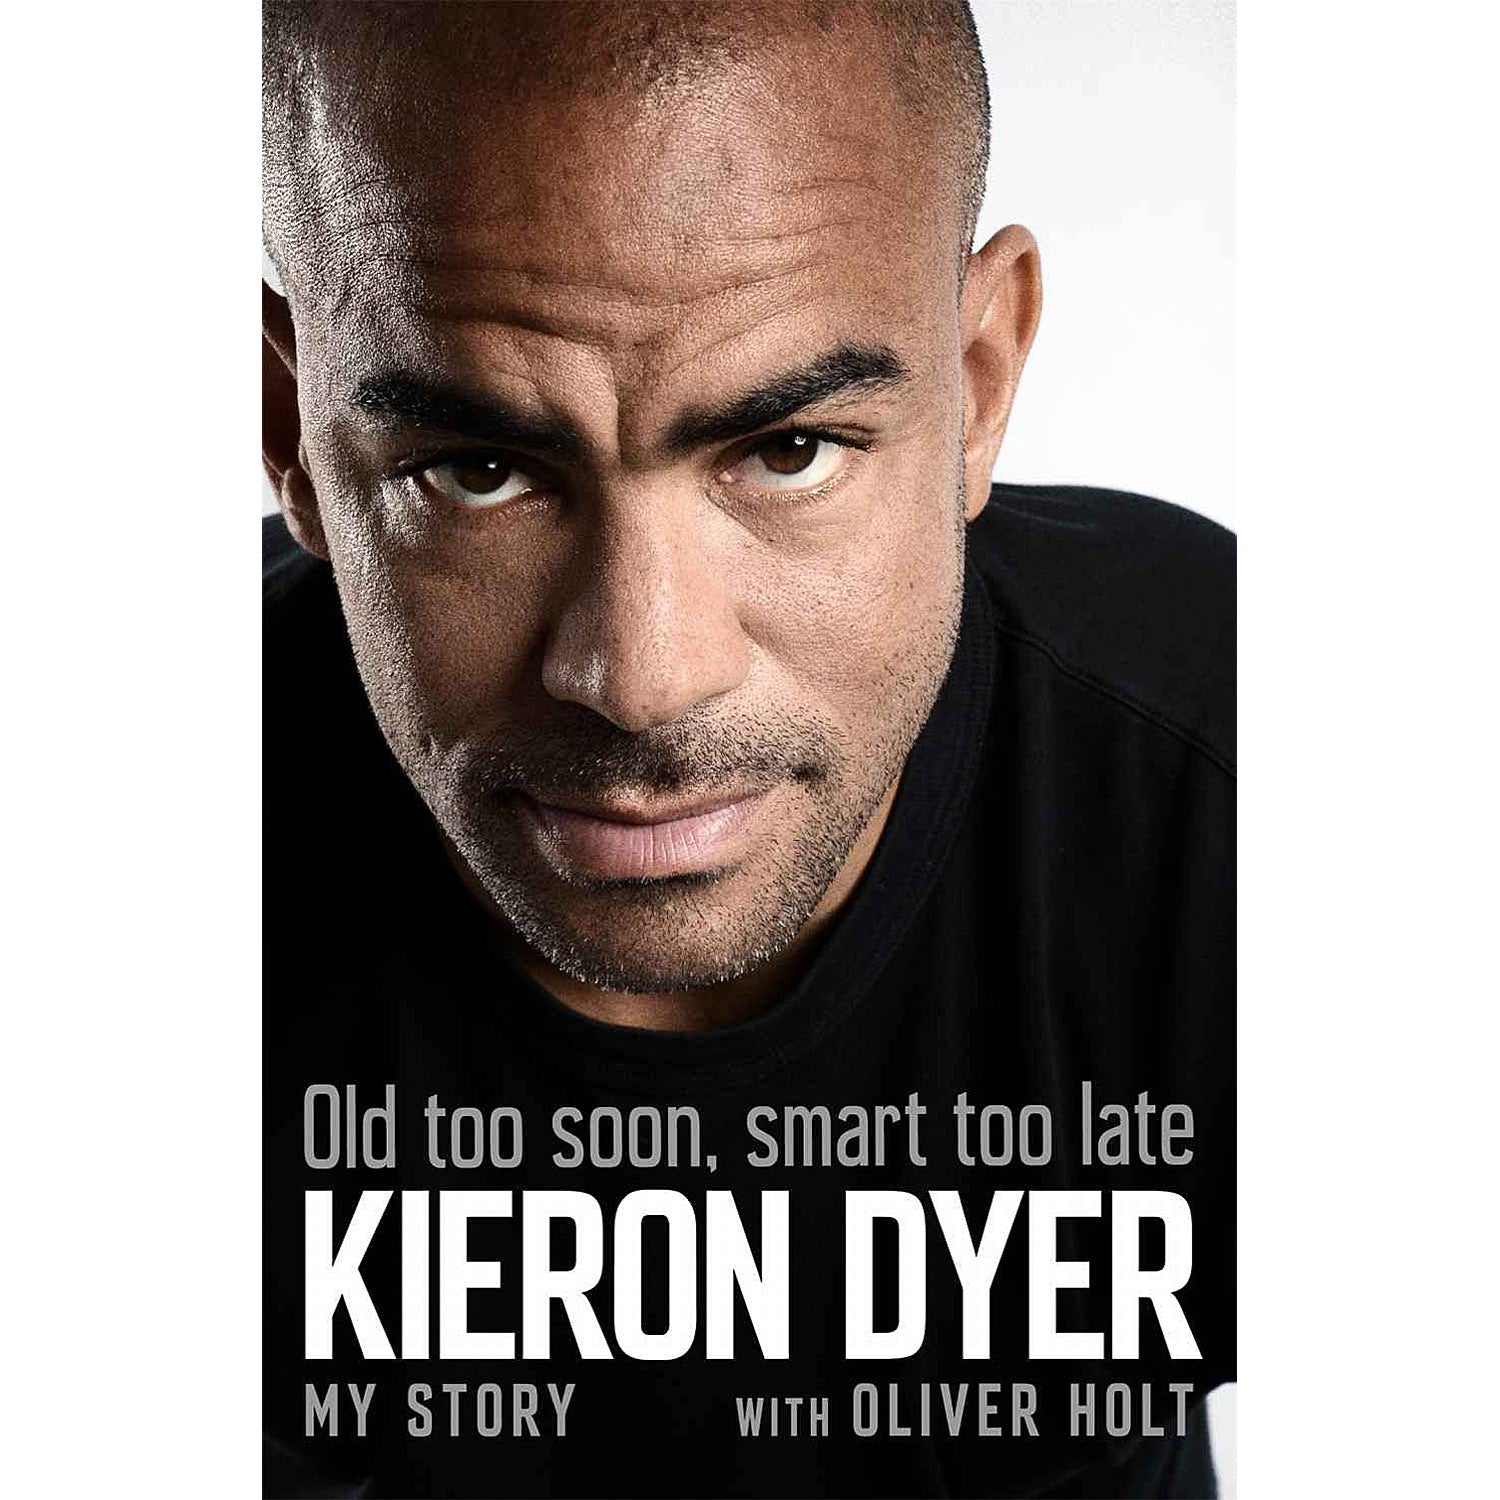 Old too soon, smart too late – Kieron Dyer – My Story